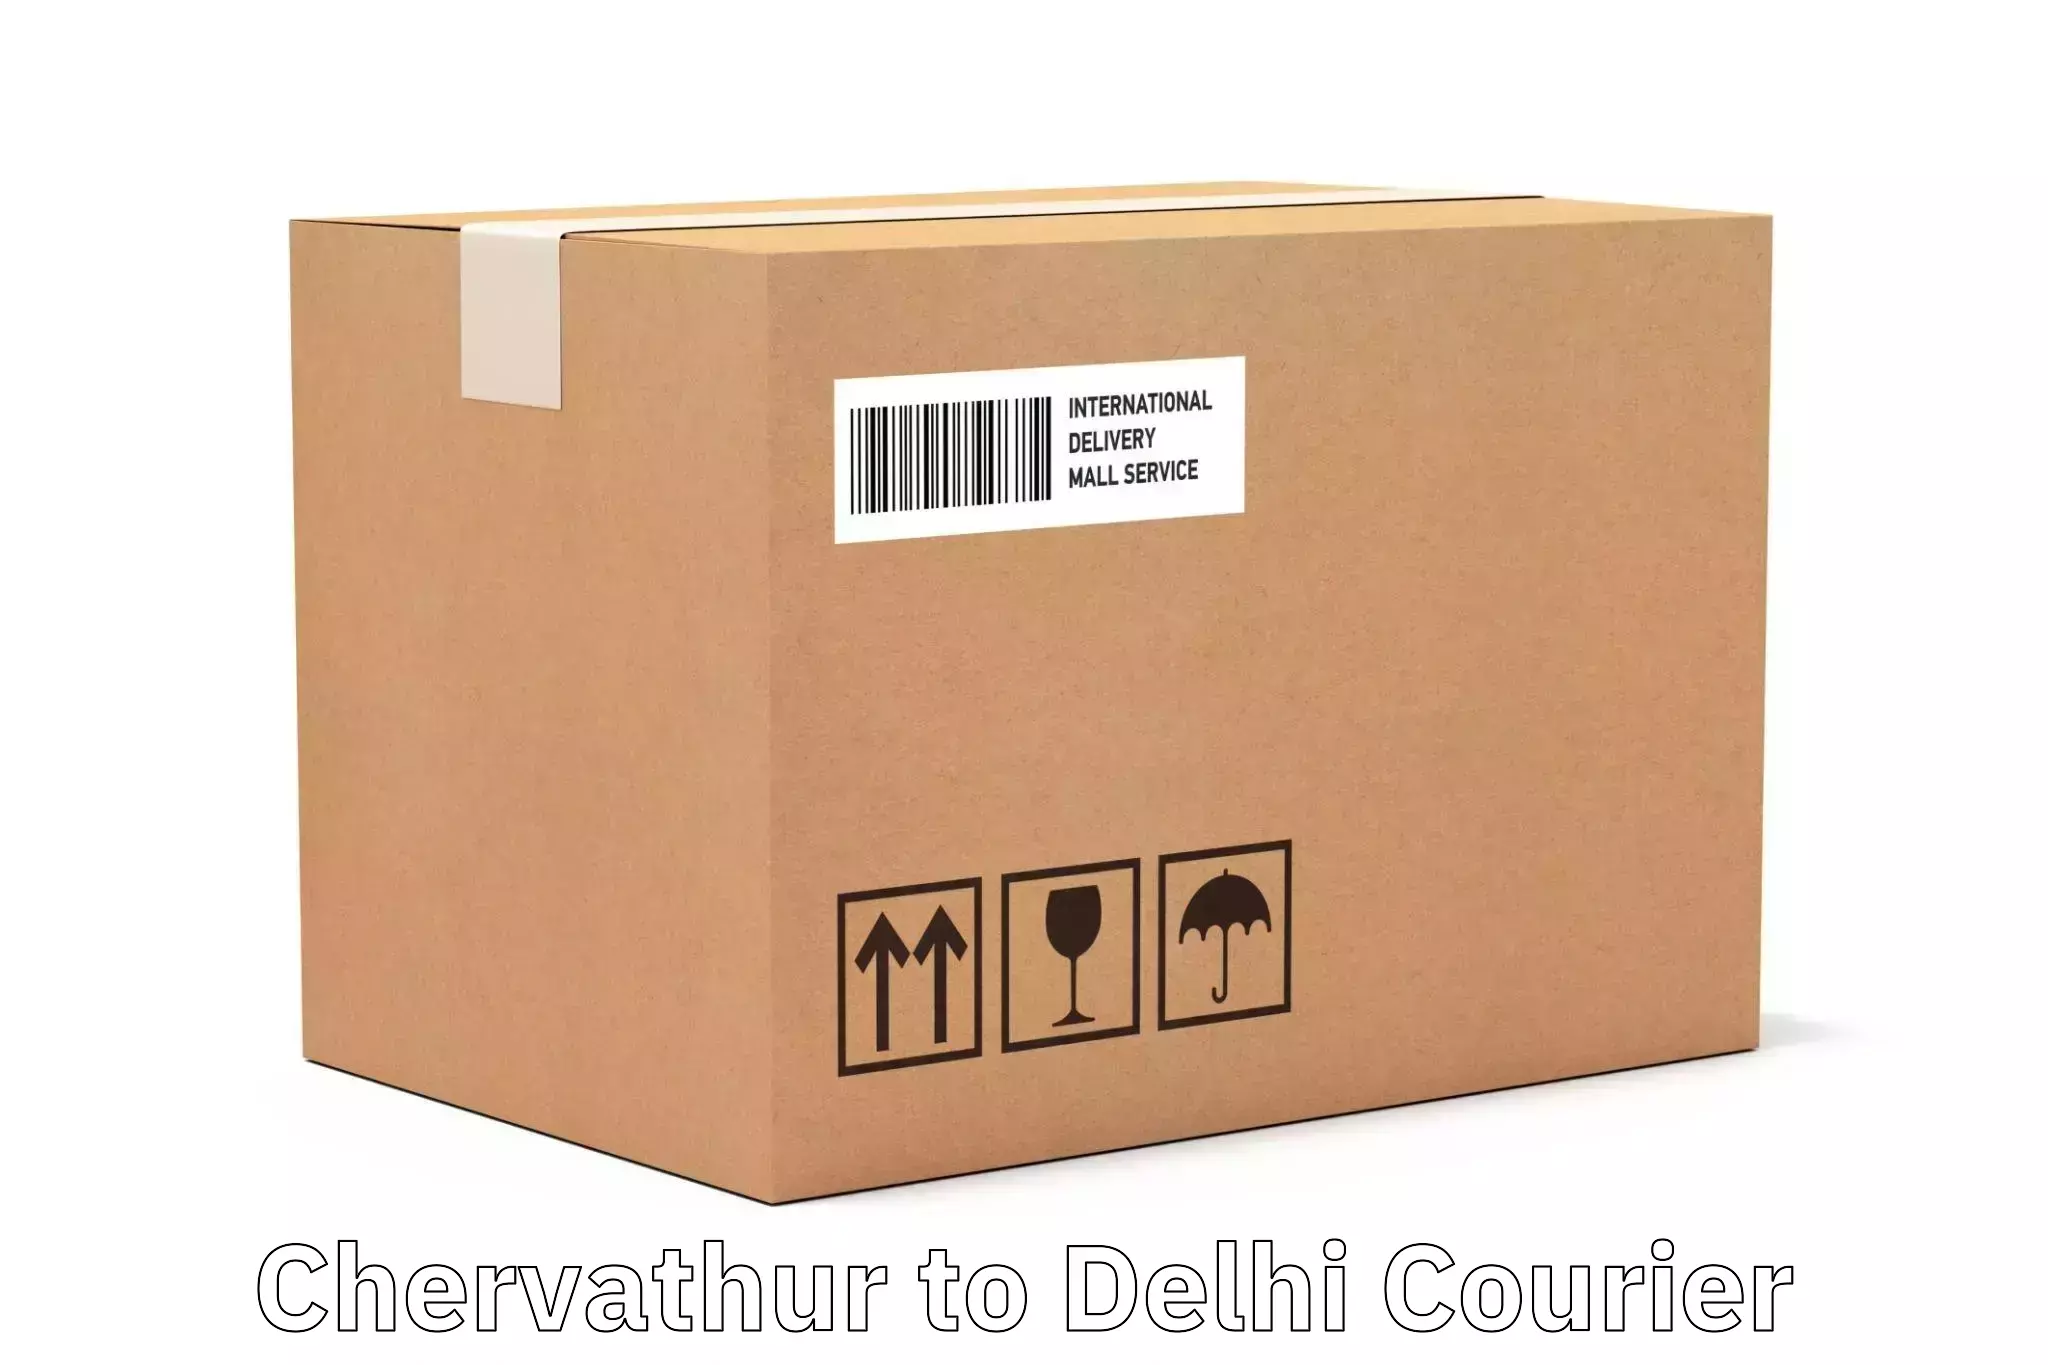 Custom courier packaging Chervathur to Jawaharlal Nehru University New Delhi